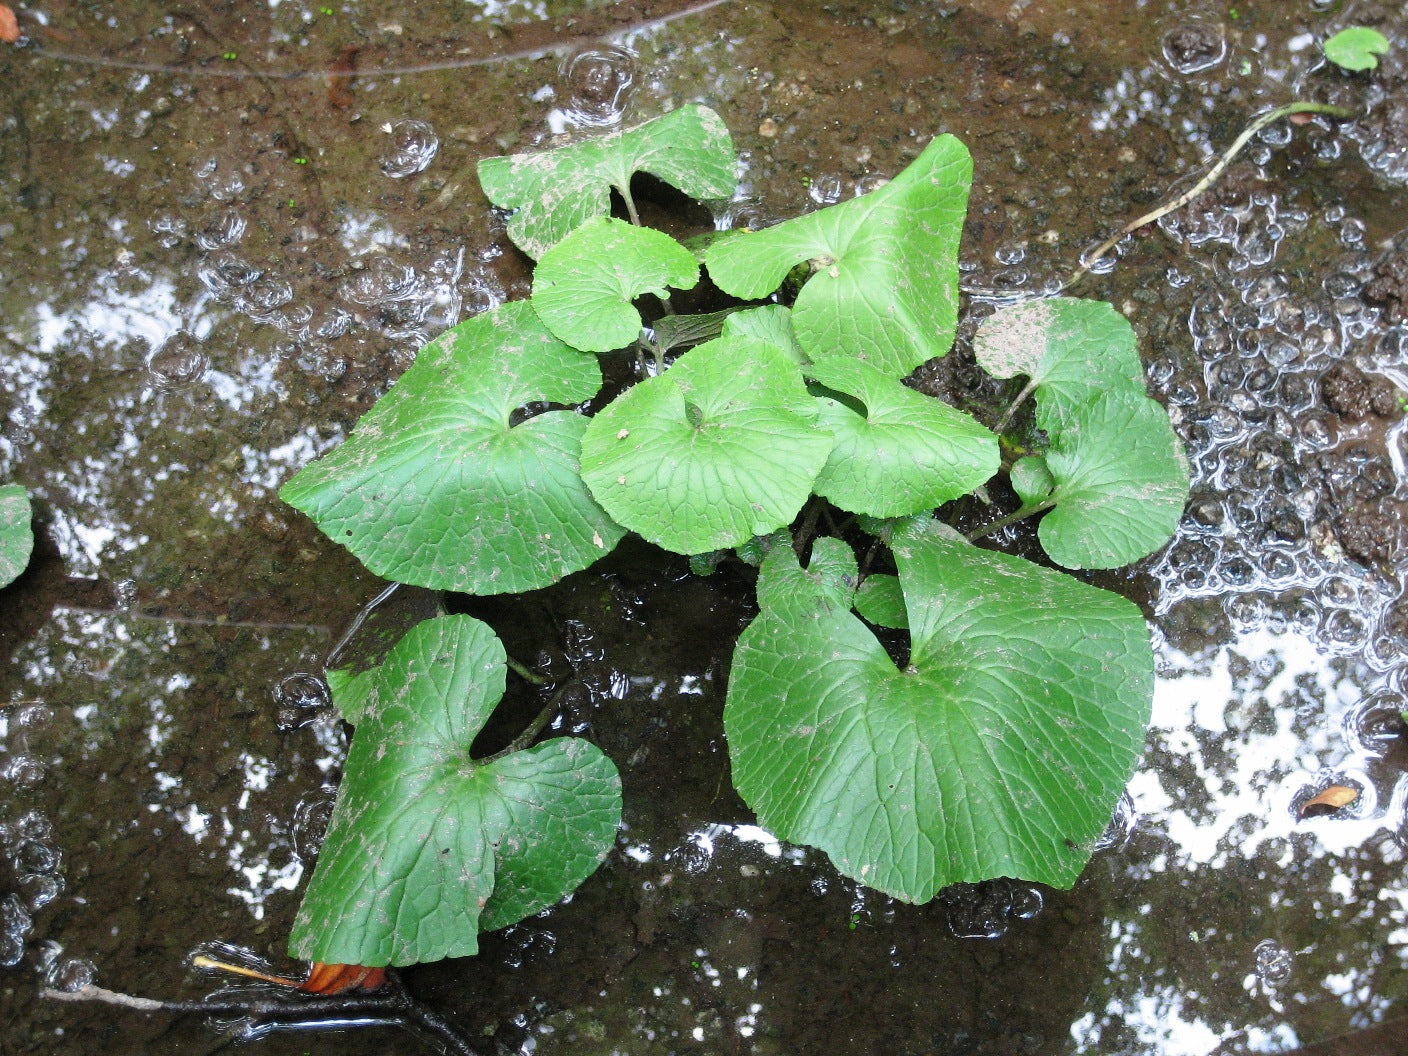 Sawa wasabi plant growing in North Carolina mountains